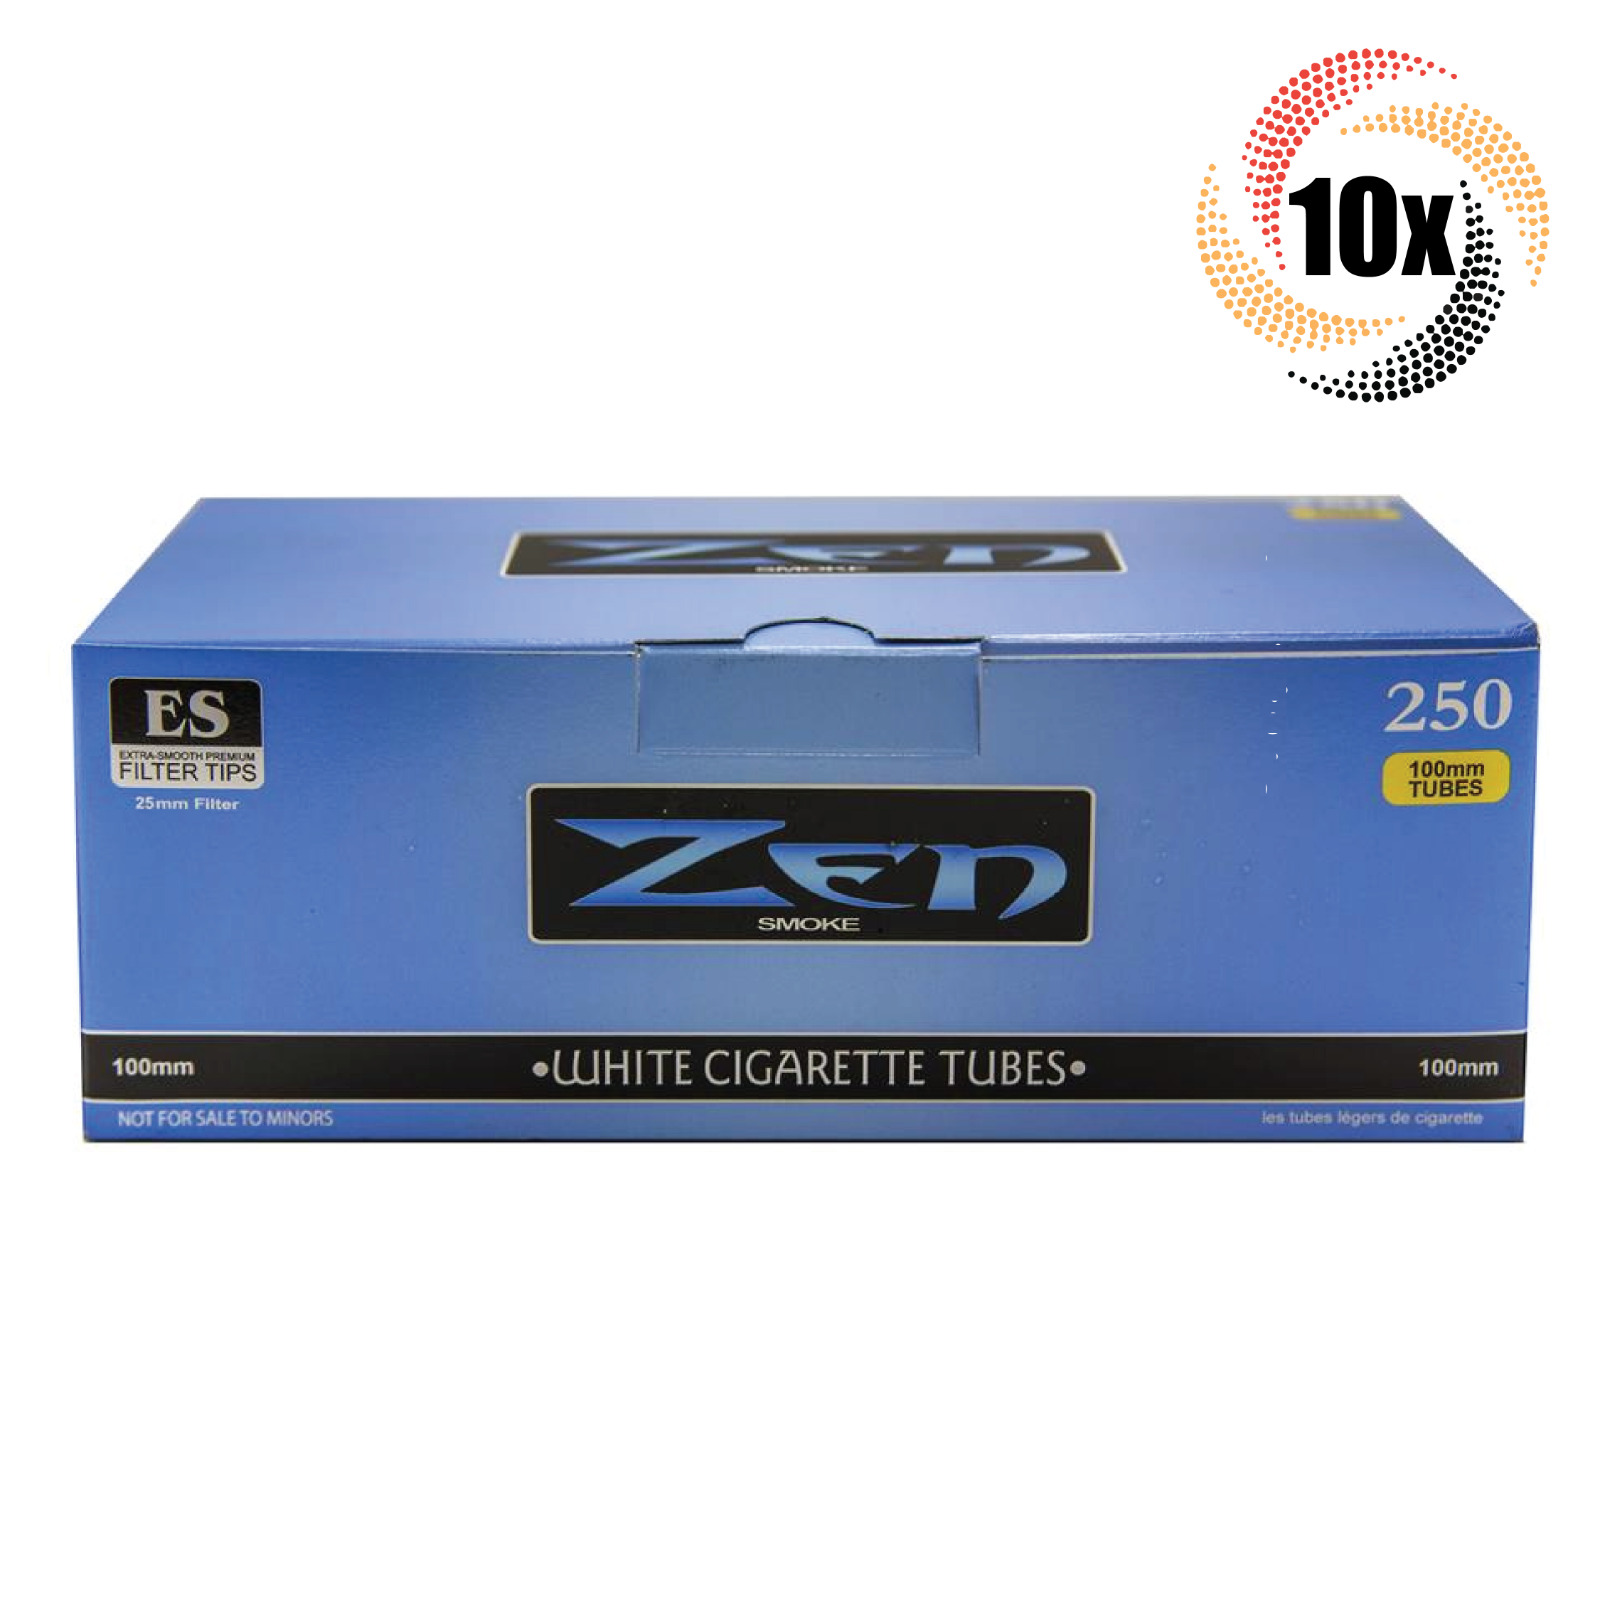 10x Boxes ZEN Cigarette Tubes Light 100MM ( 2,500 Tubes ) Cigarette Tube RYO